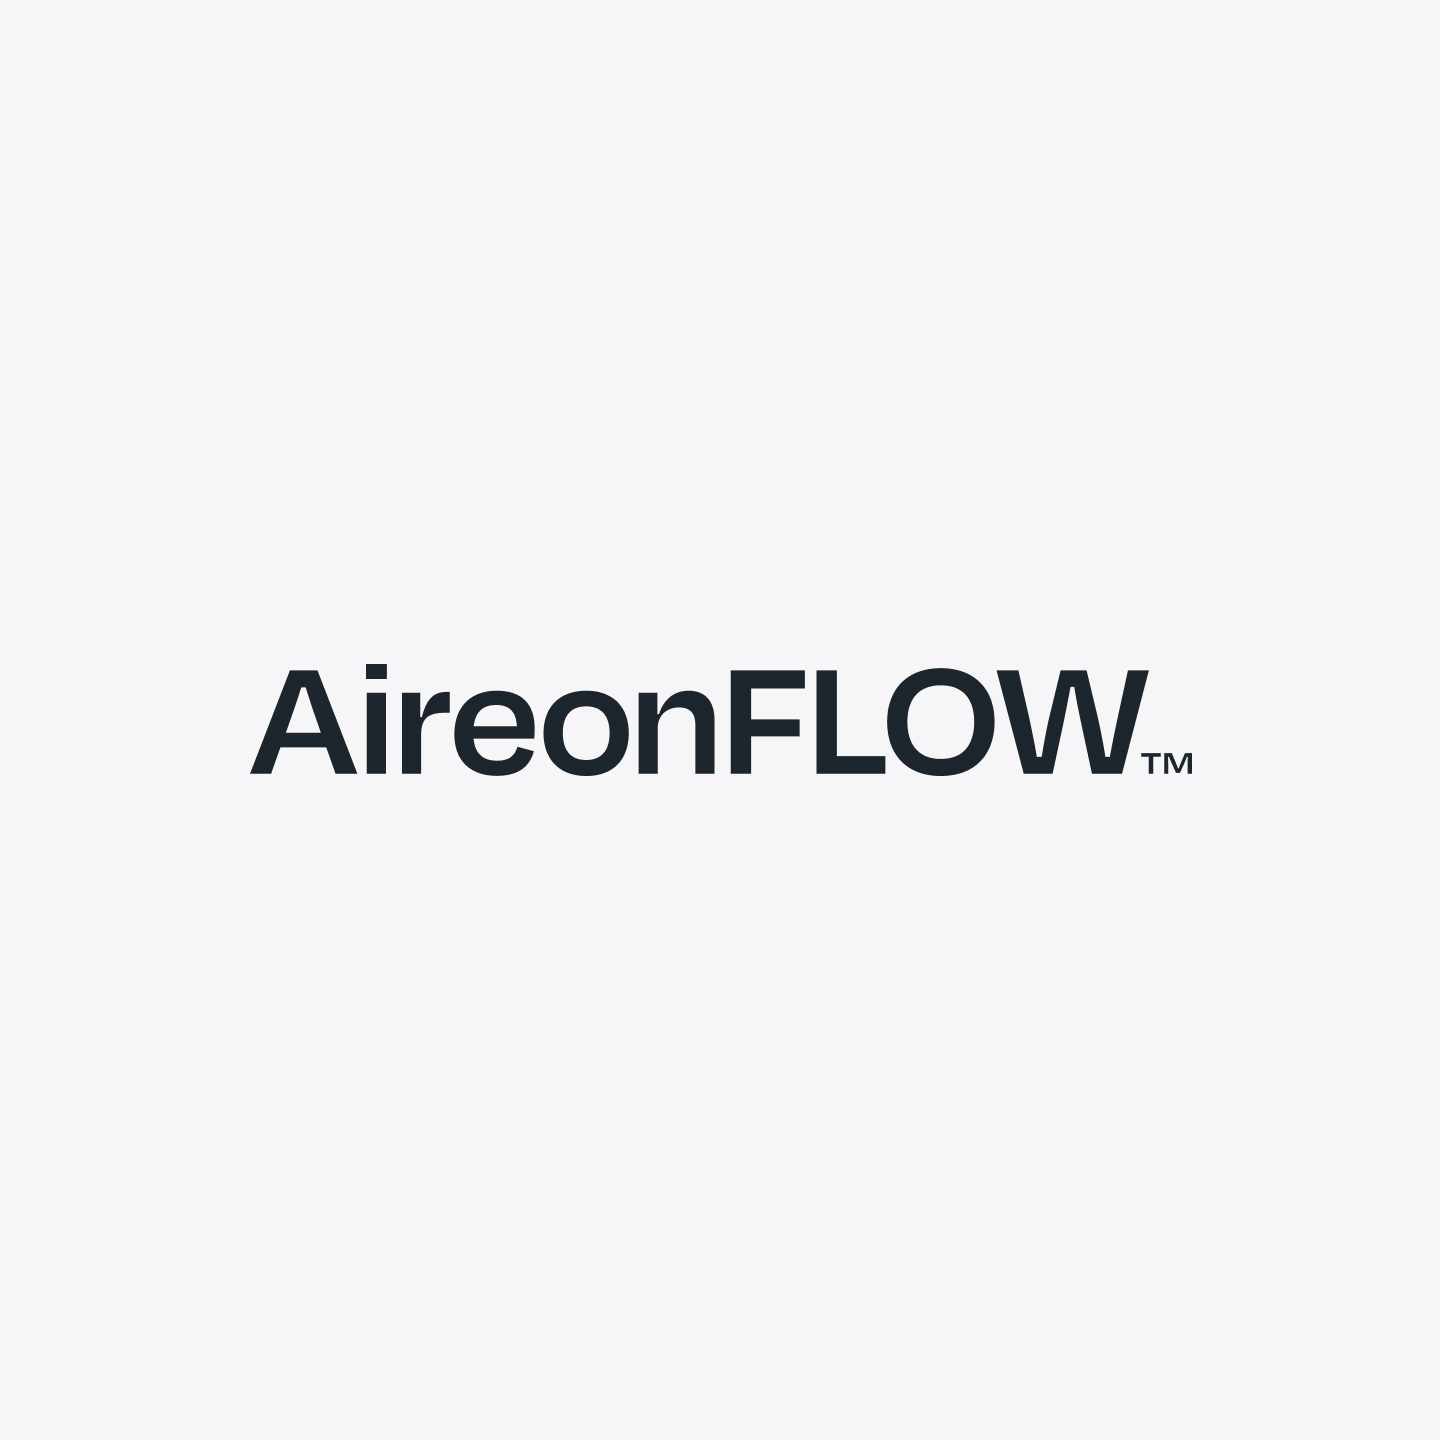 aireon flow logo